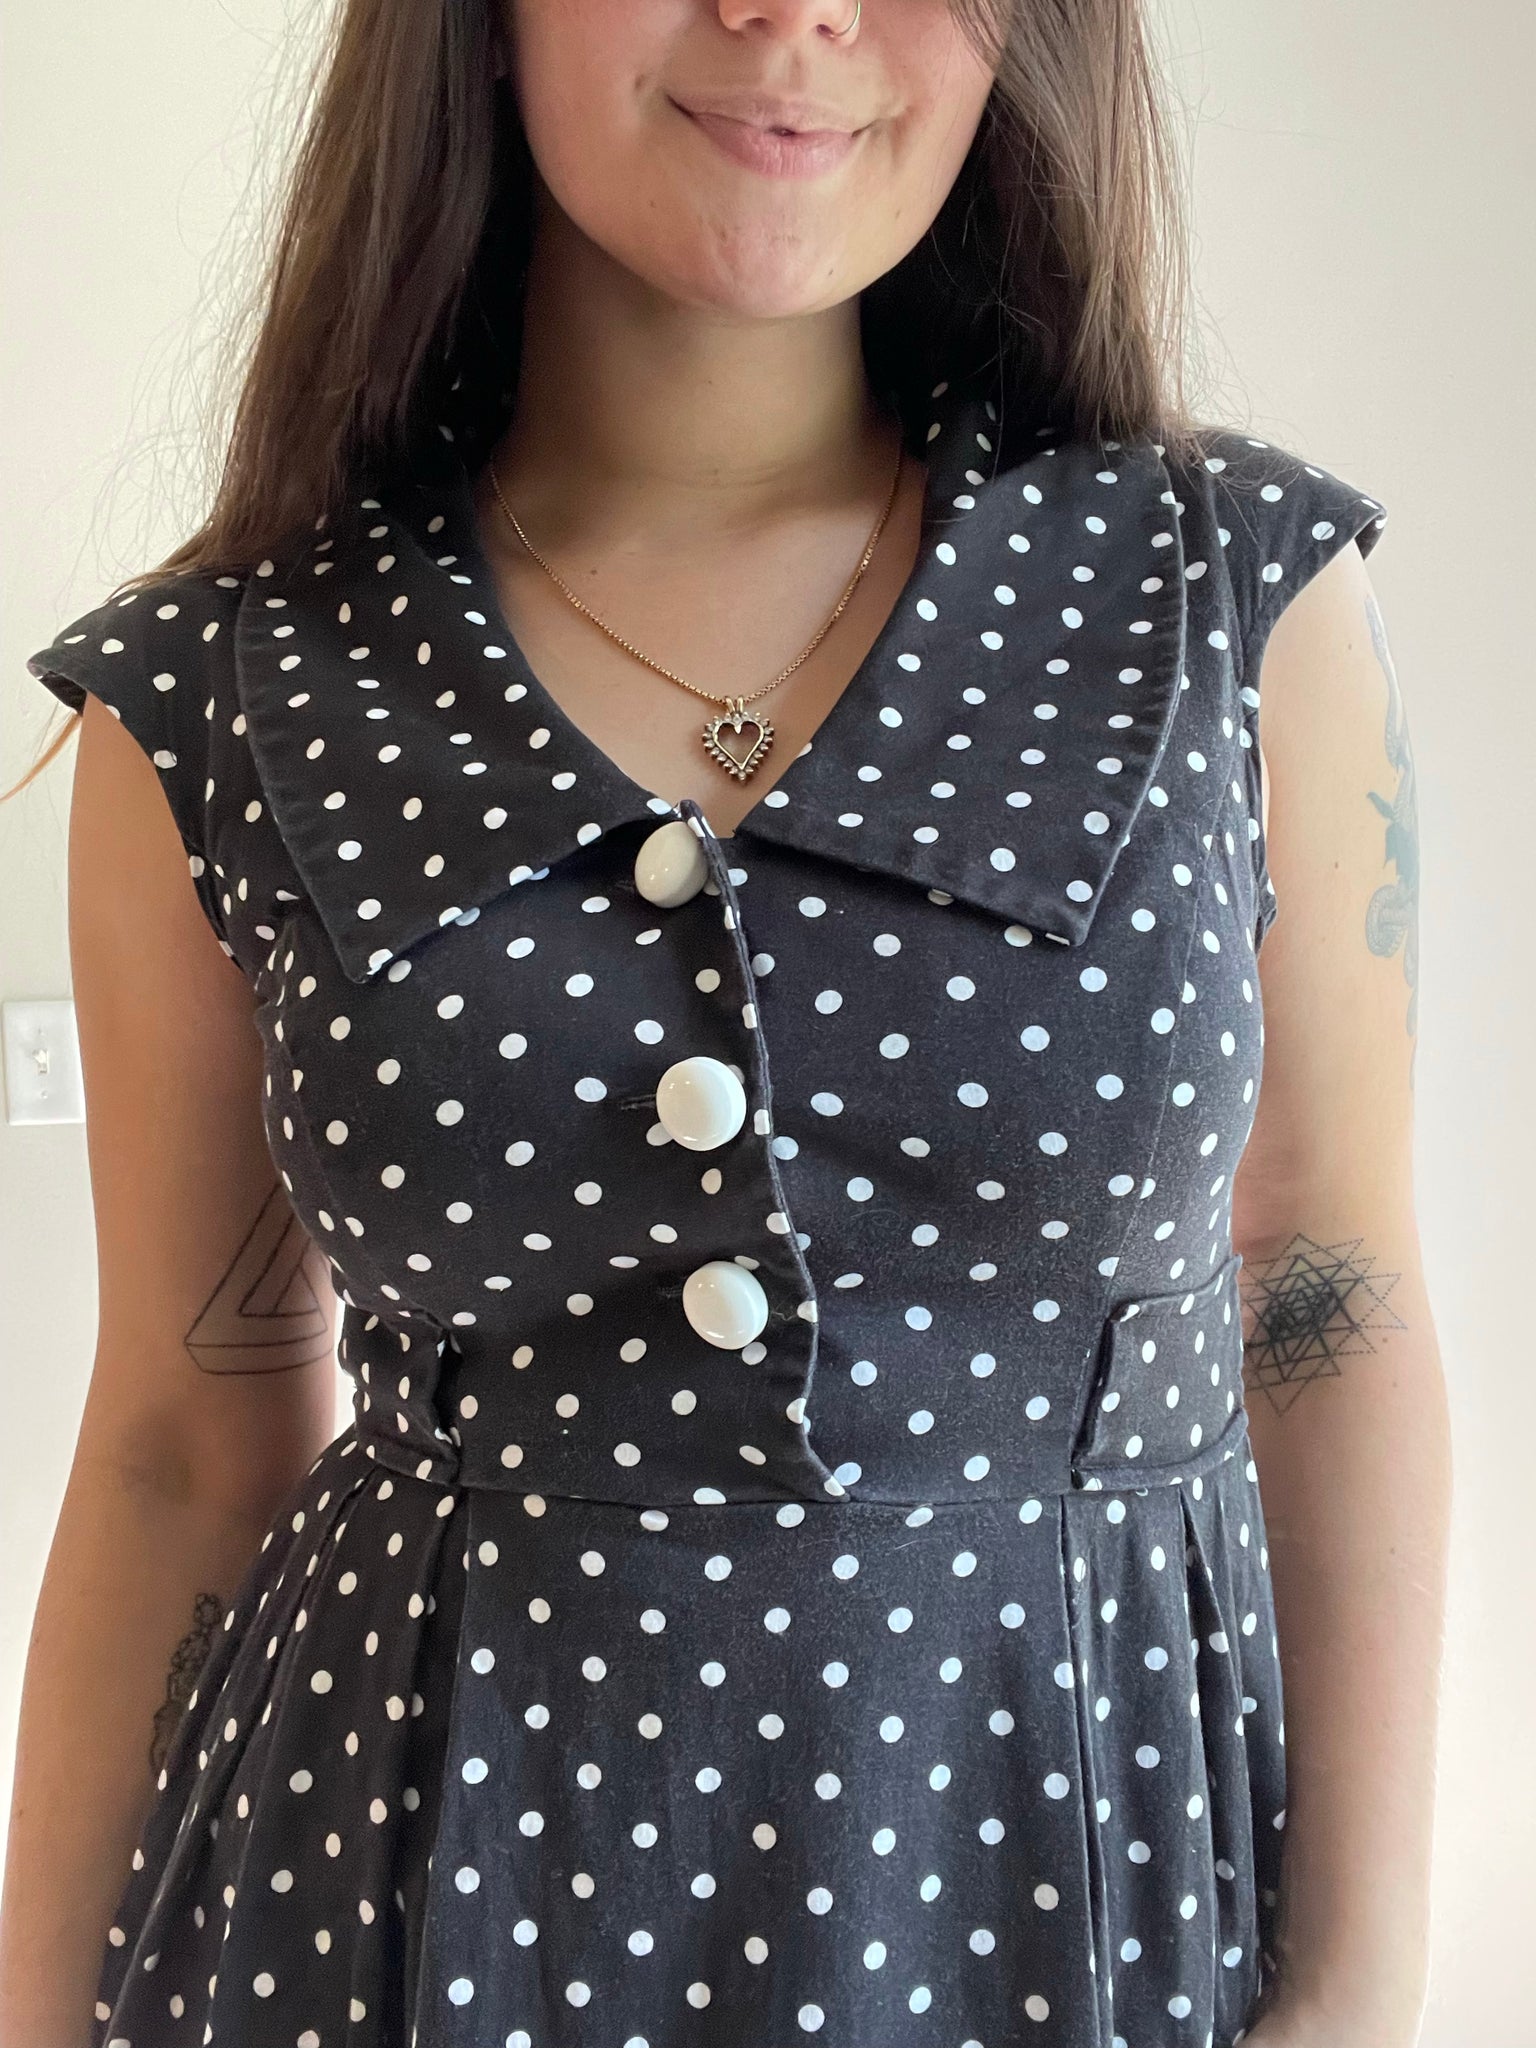 Maggy London pinup polka dot dress, Size 6